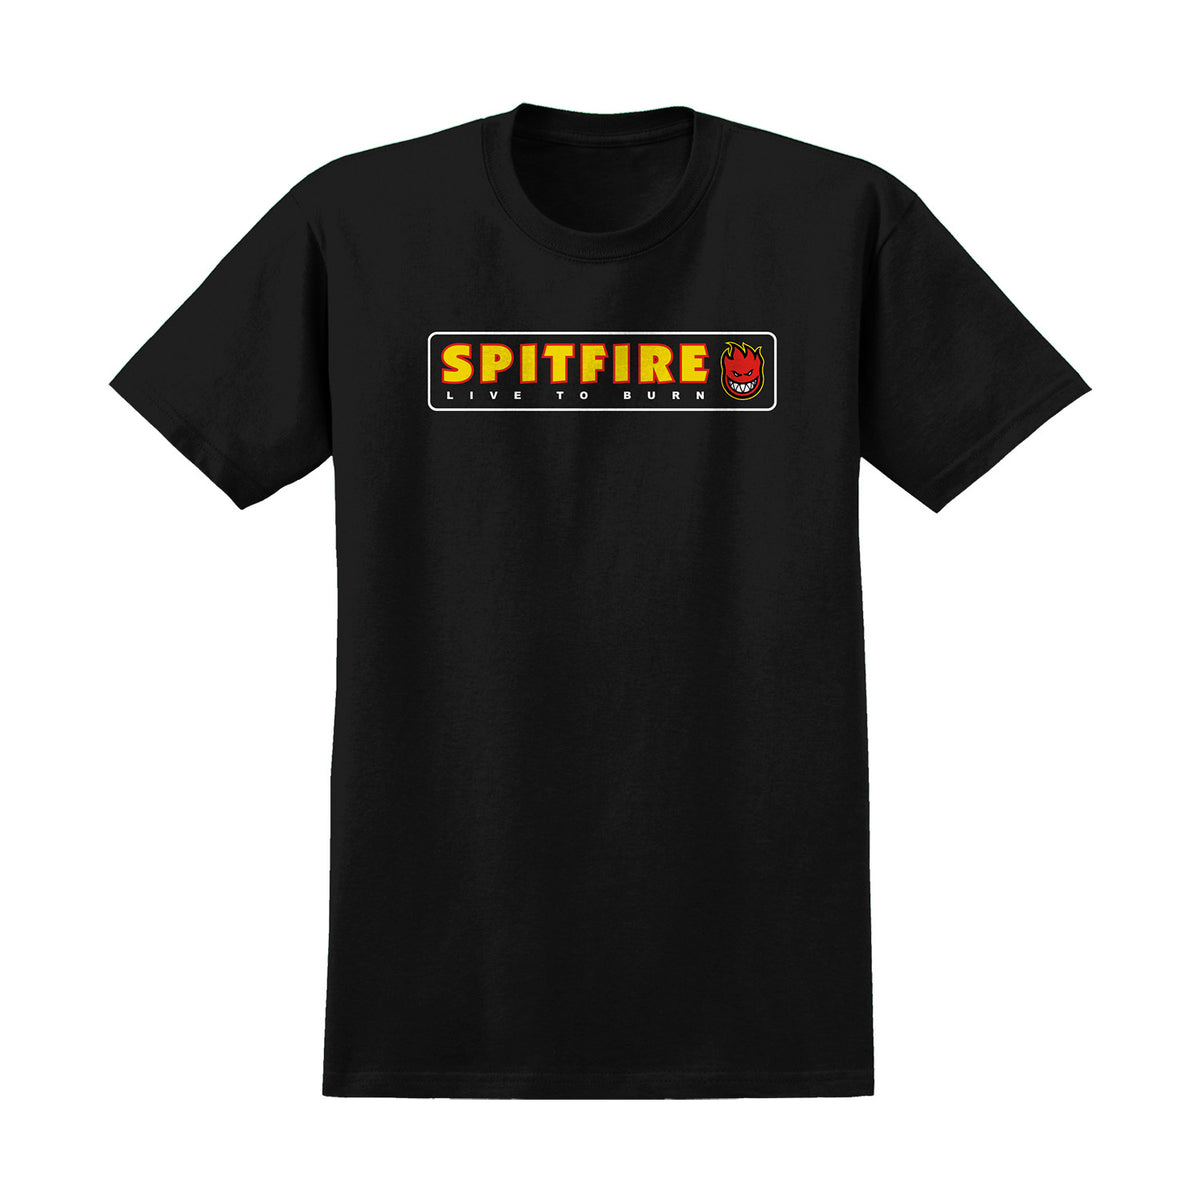 Spitfire Live to Burn T-Shirt